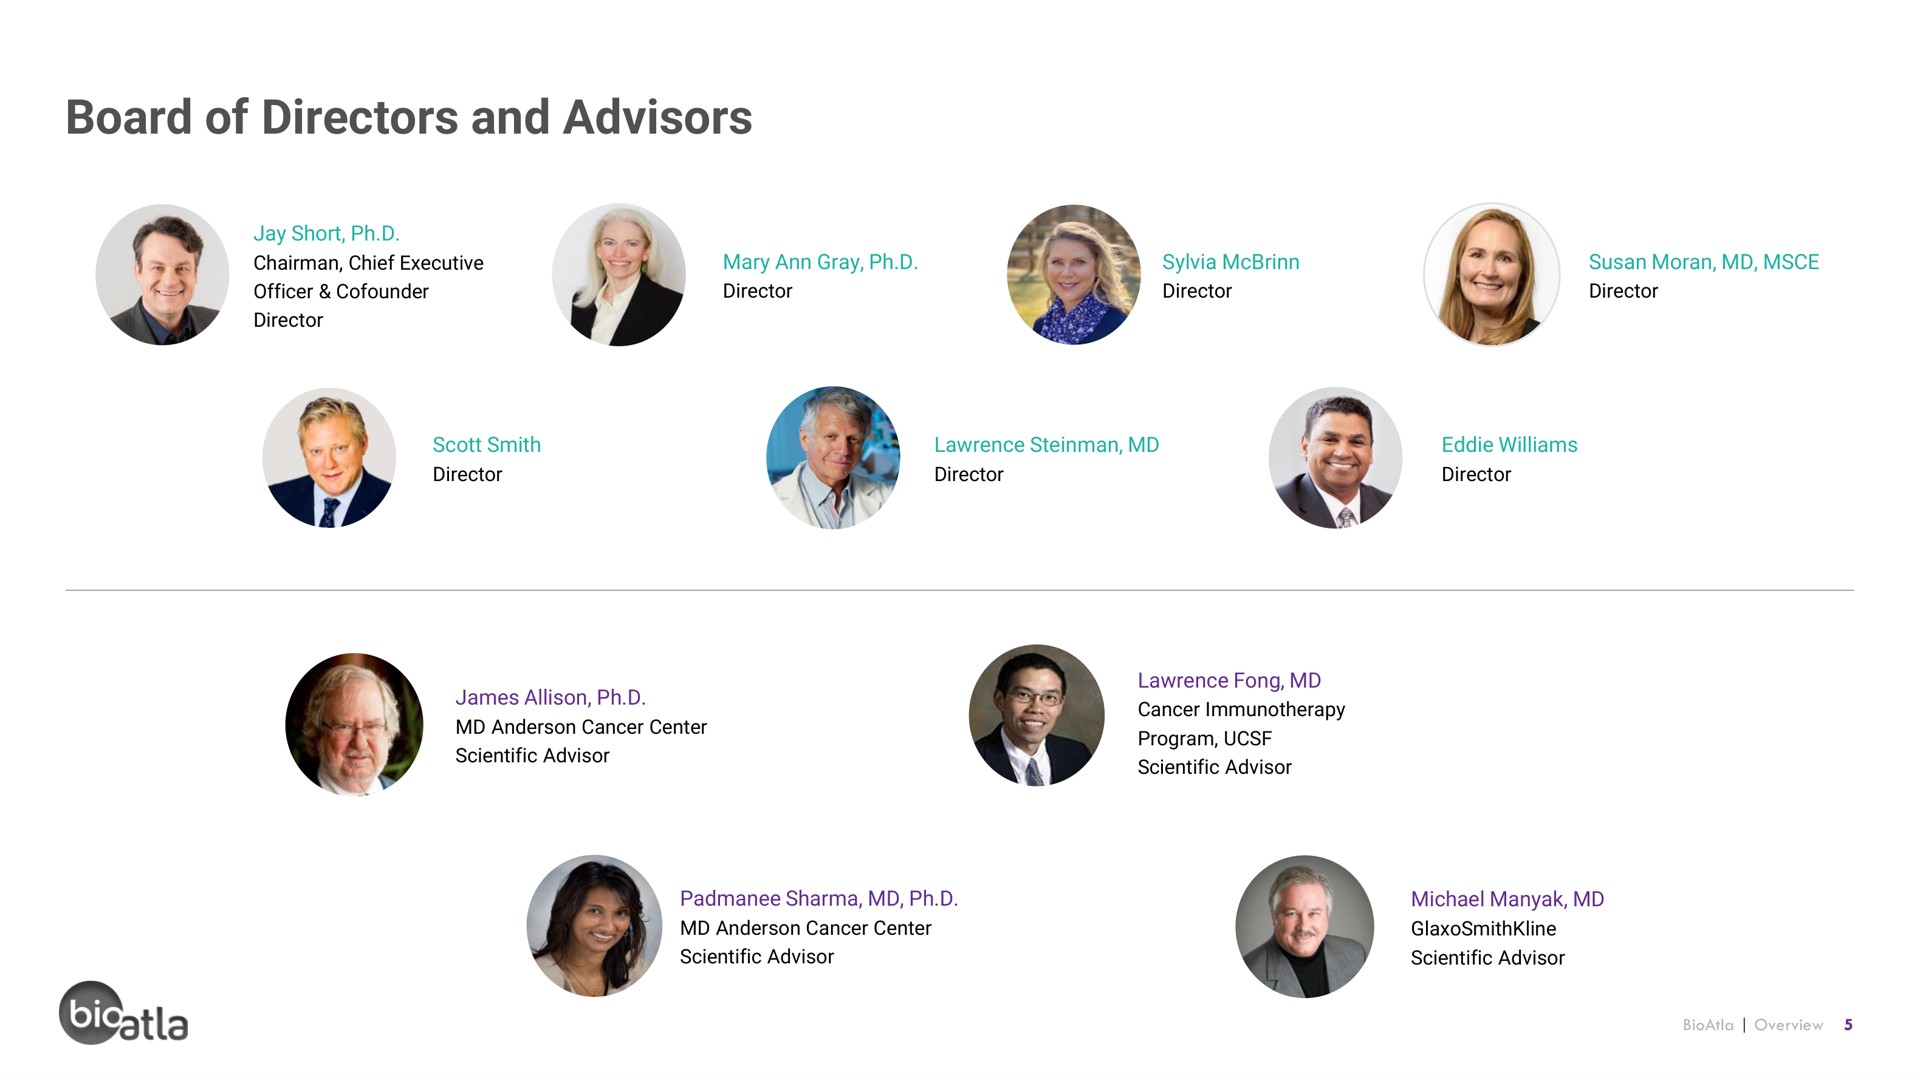 board of directors and advisors | BioAtla